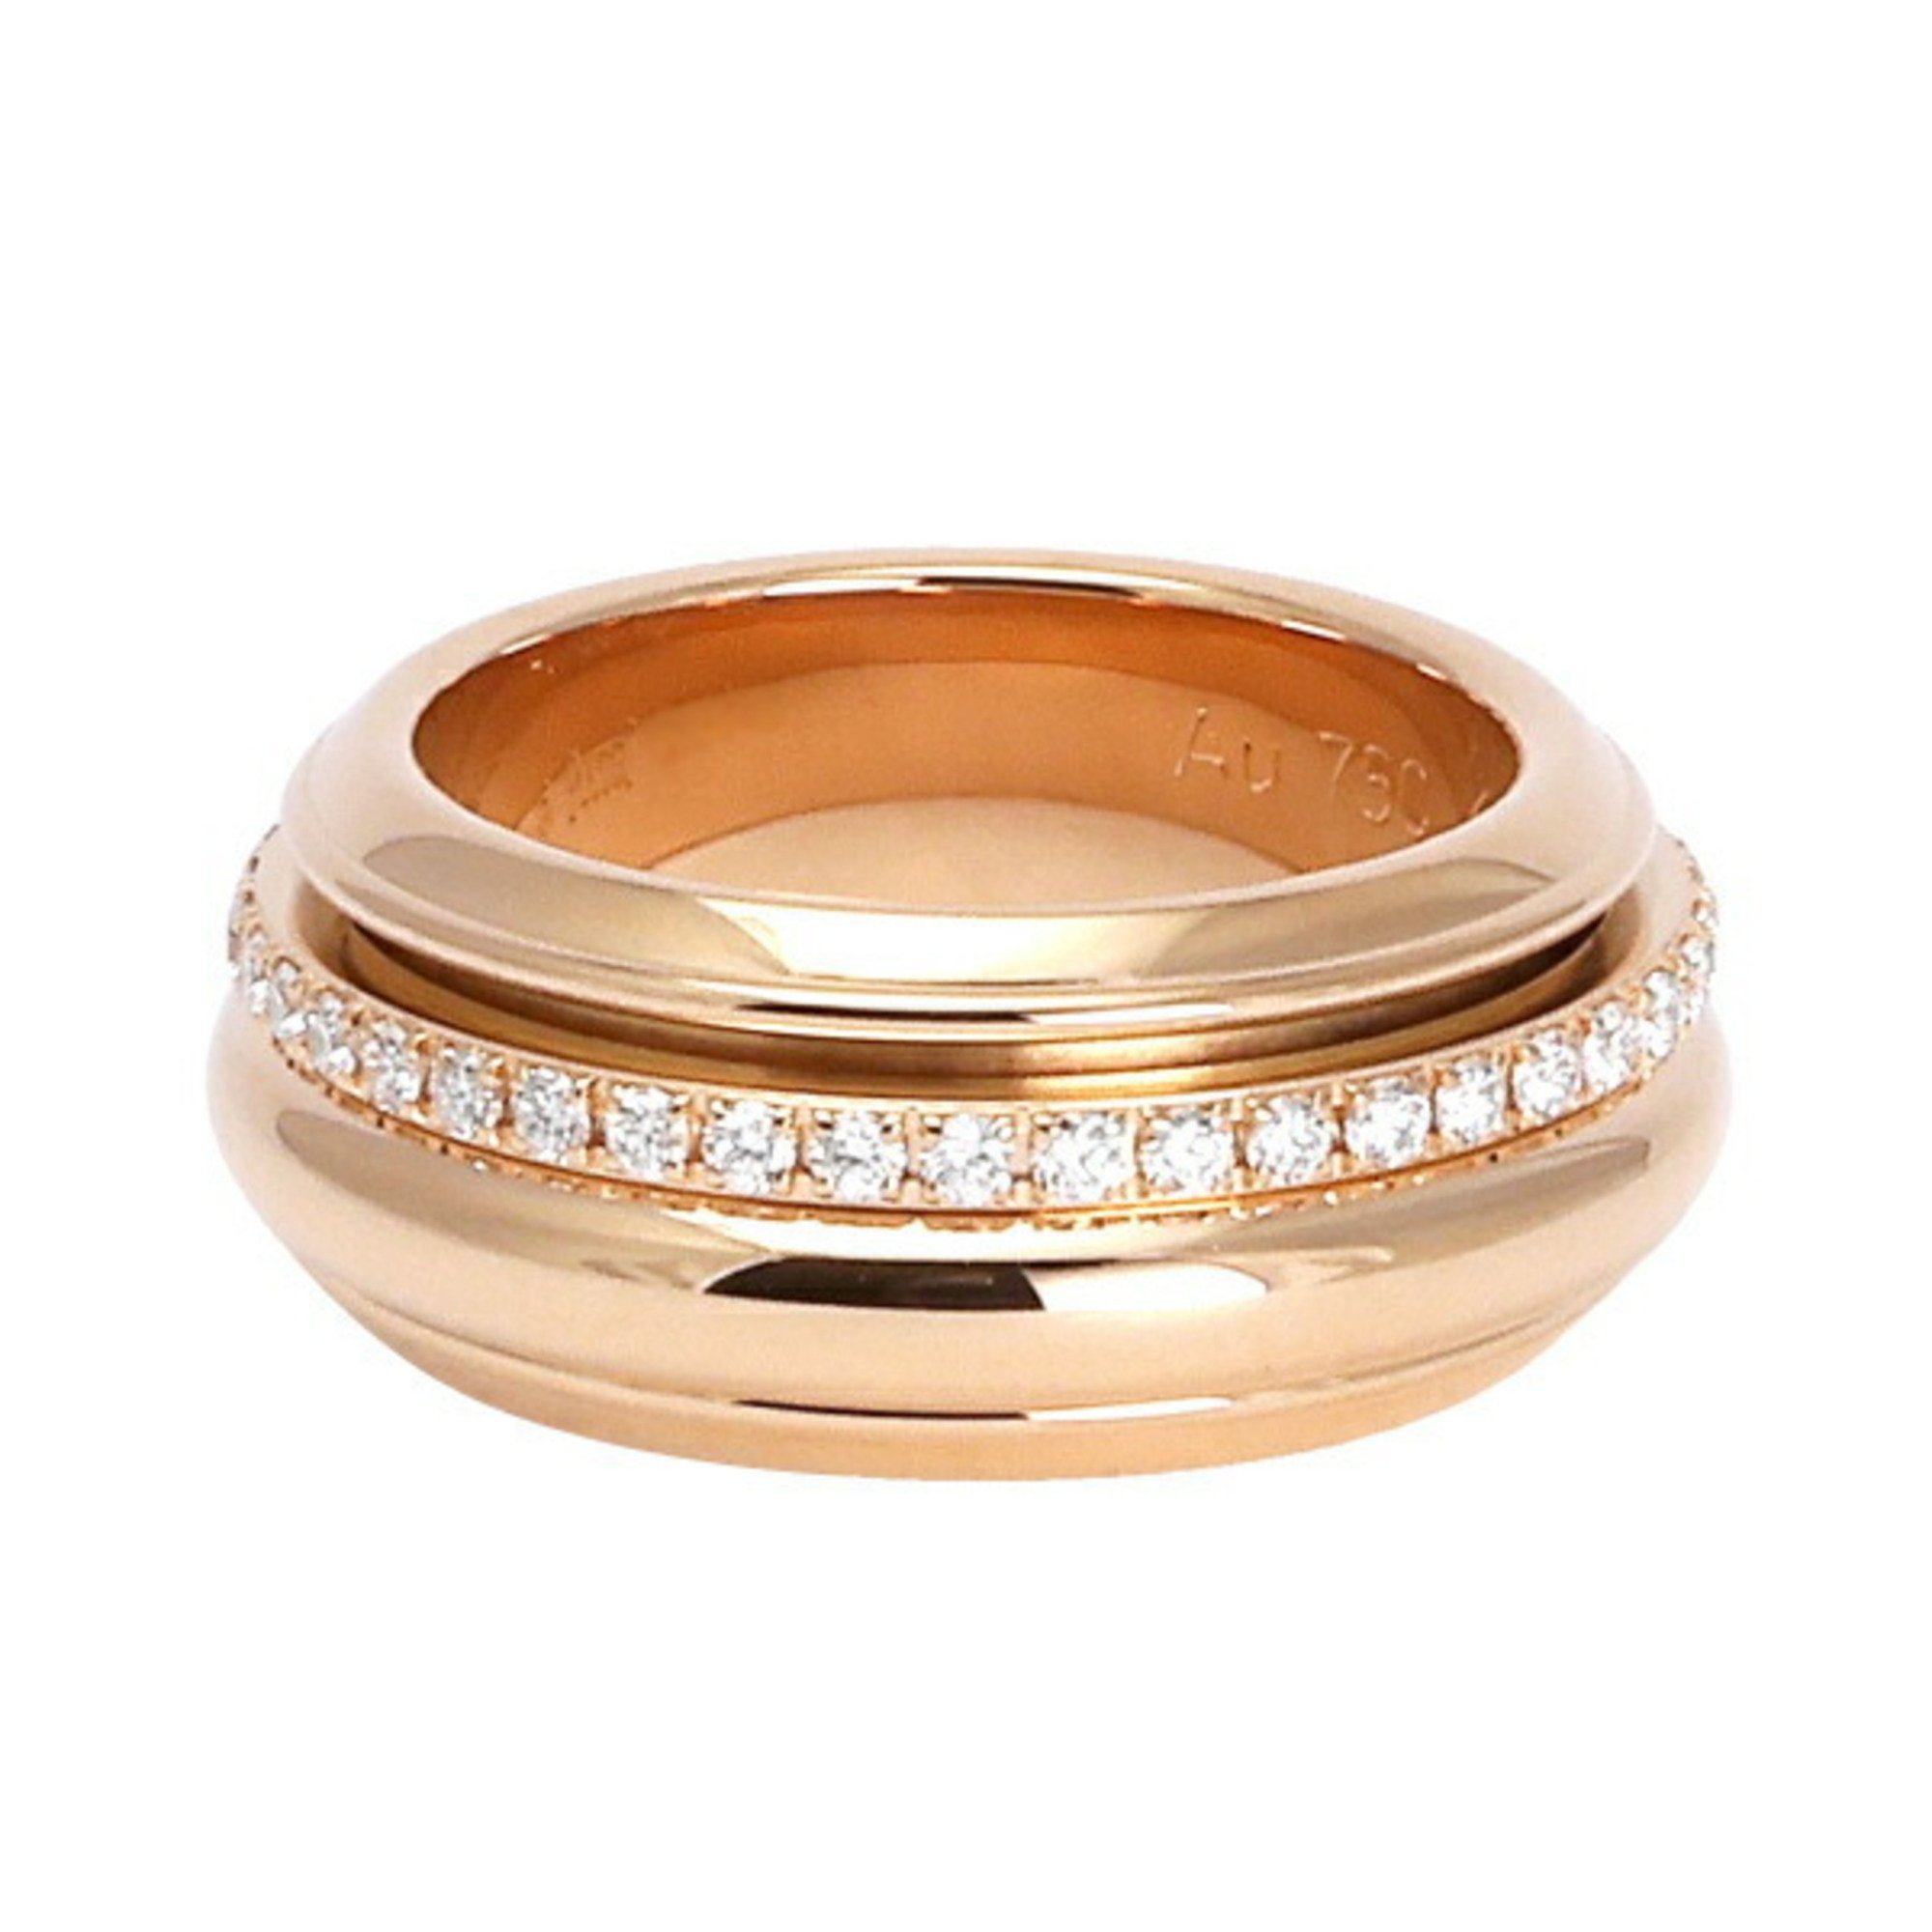 Piaget Possession K18PG pink gold ring